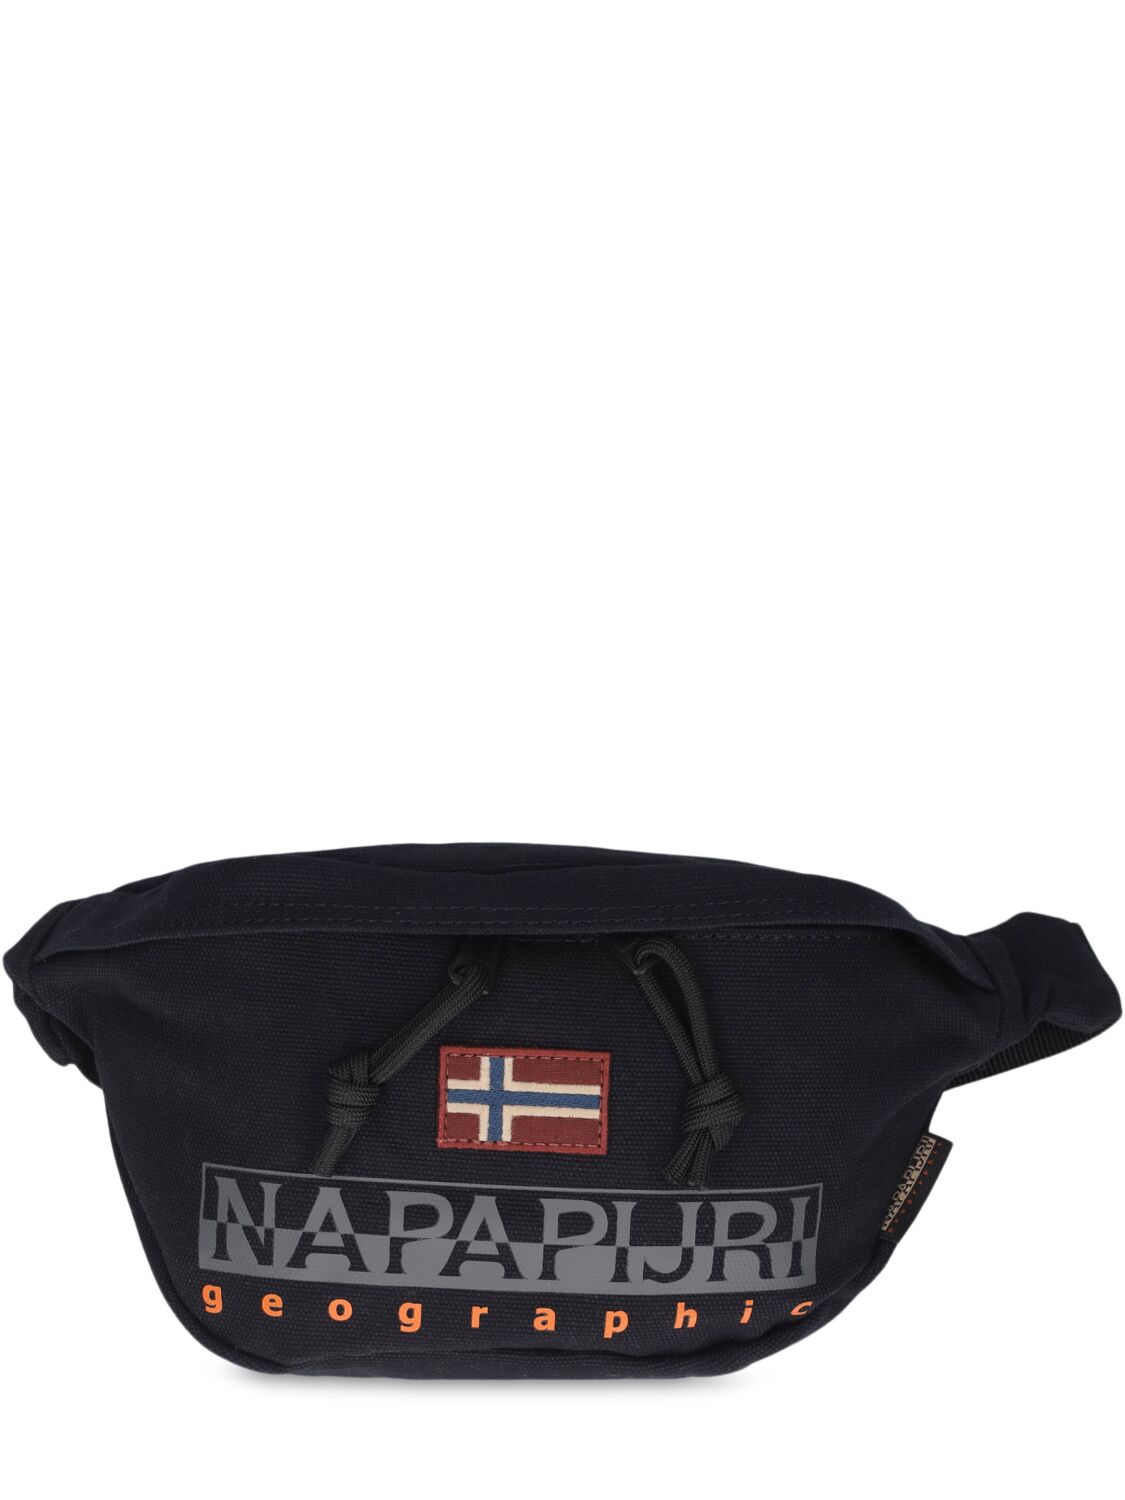 Napapijri H-hornby Cotton Belt Bag In Black